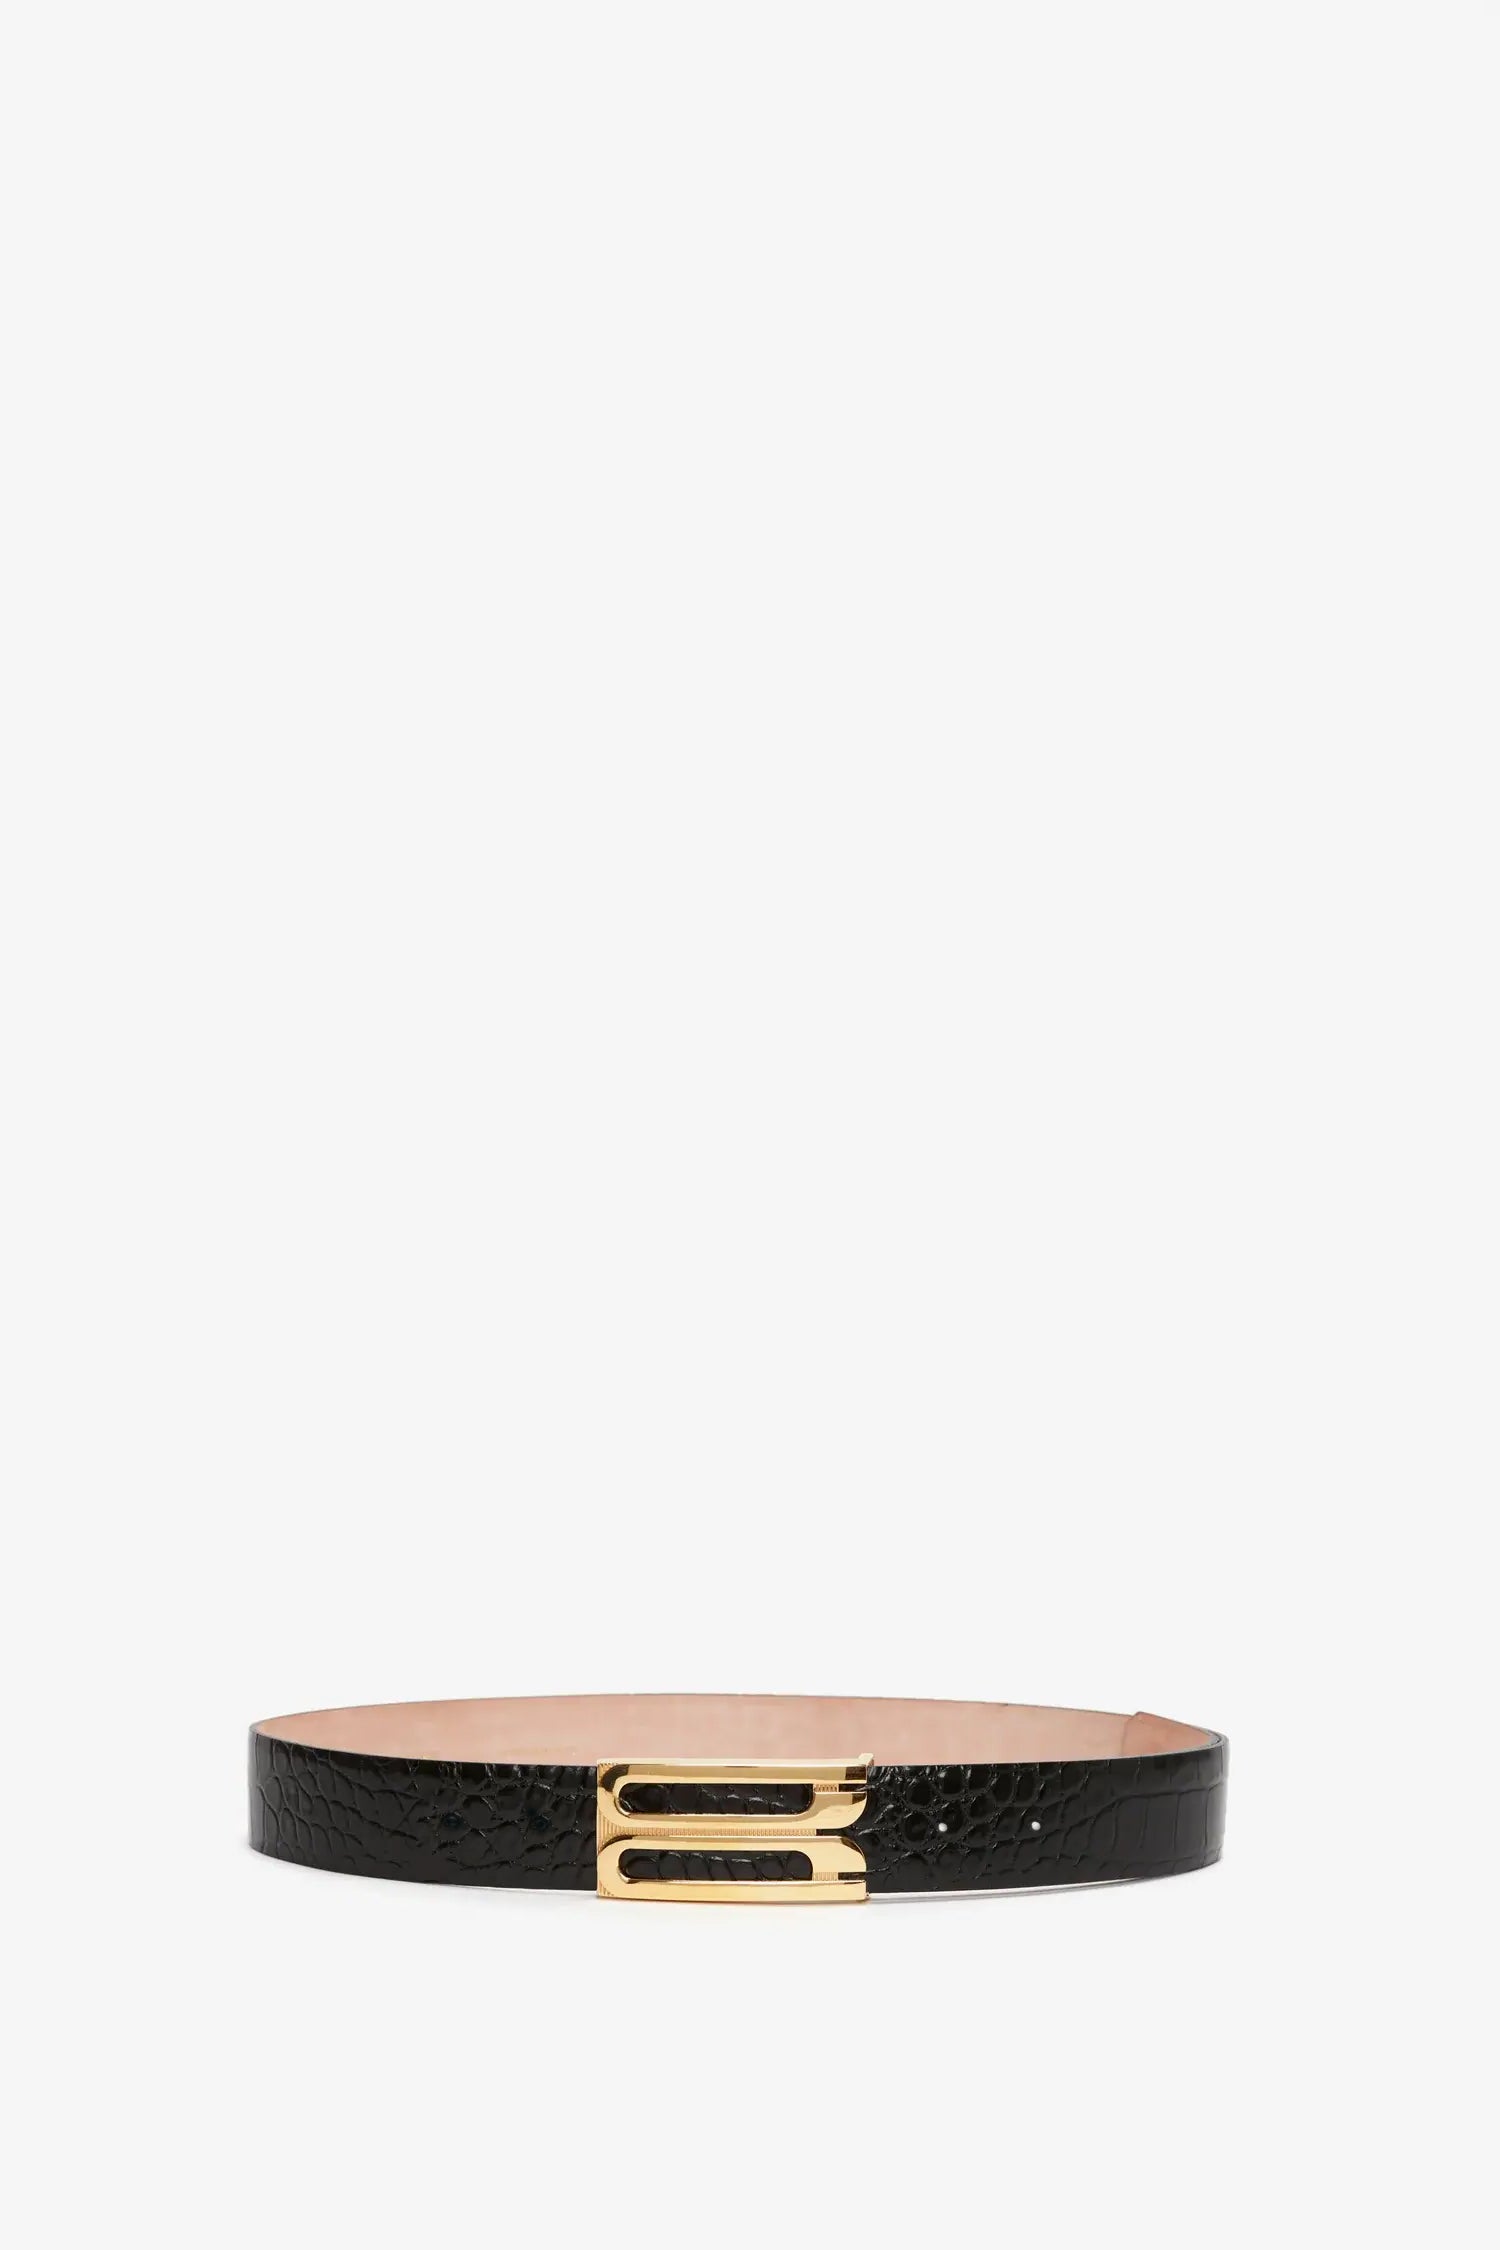 Victoria Beckham Jumbo Frame Belt in Black Croc-effect Leather S